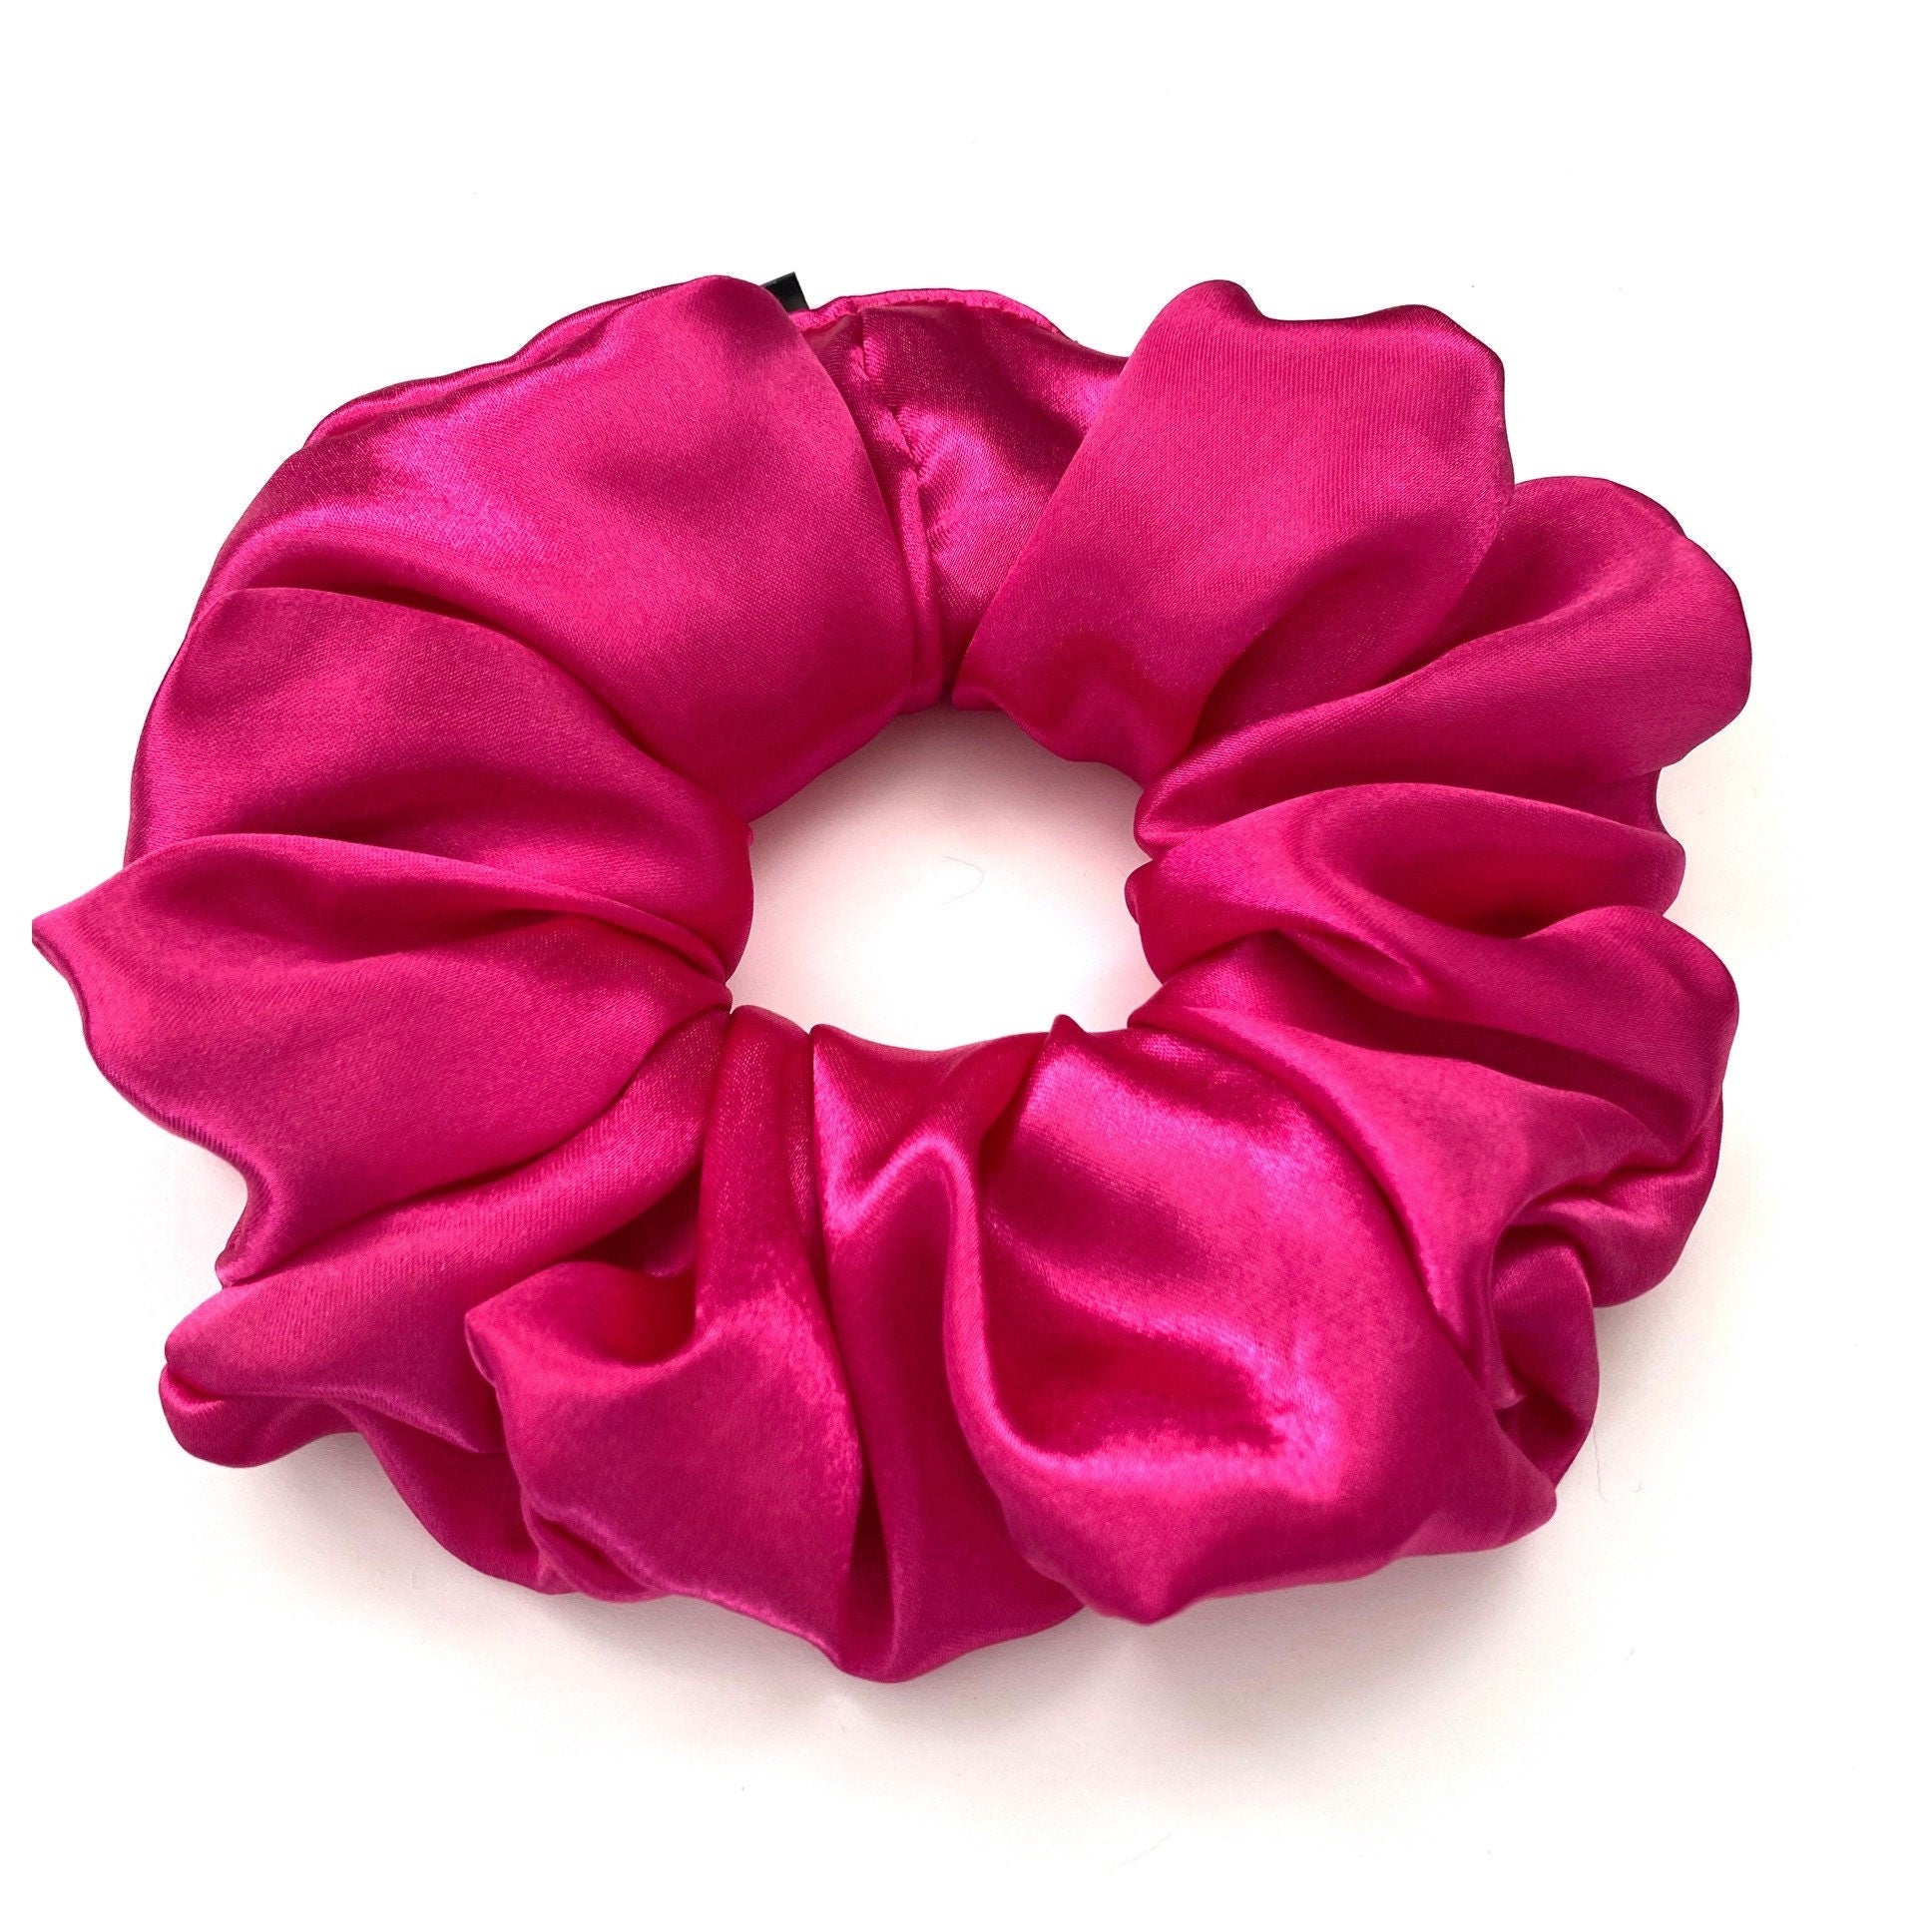 XL- Extra Large Oversized Satin Hair Scrunchie - Pink